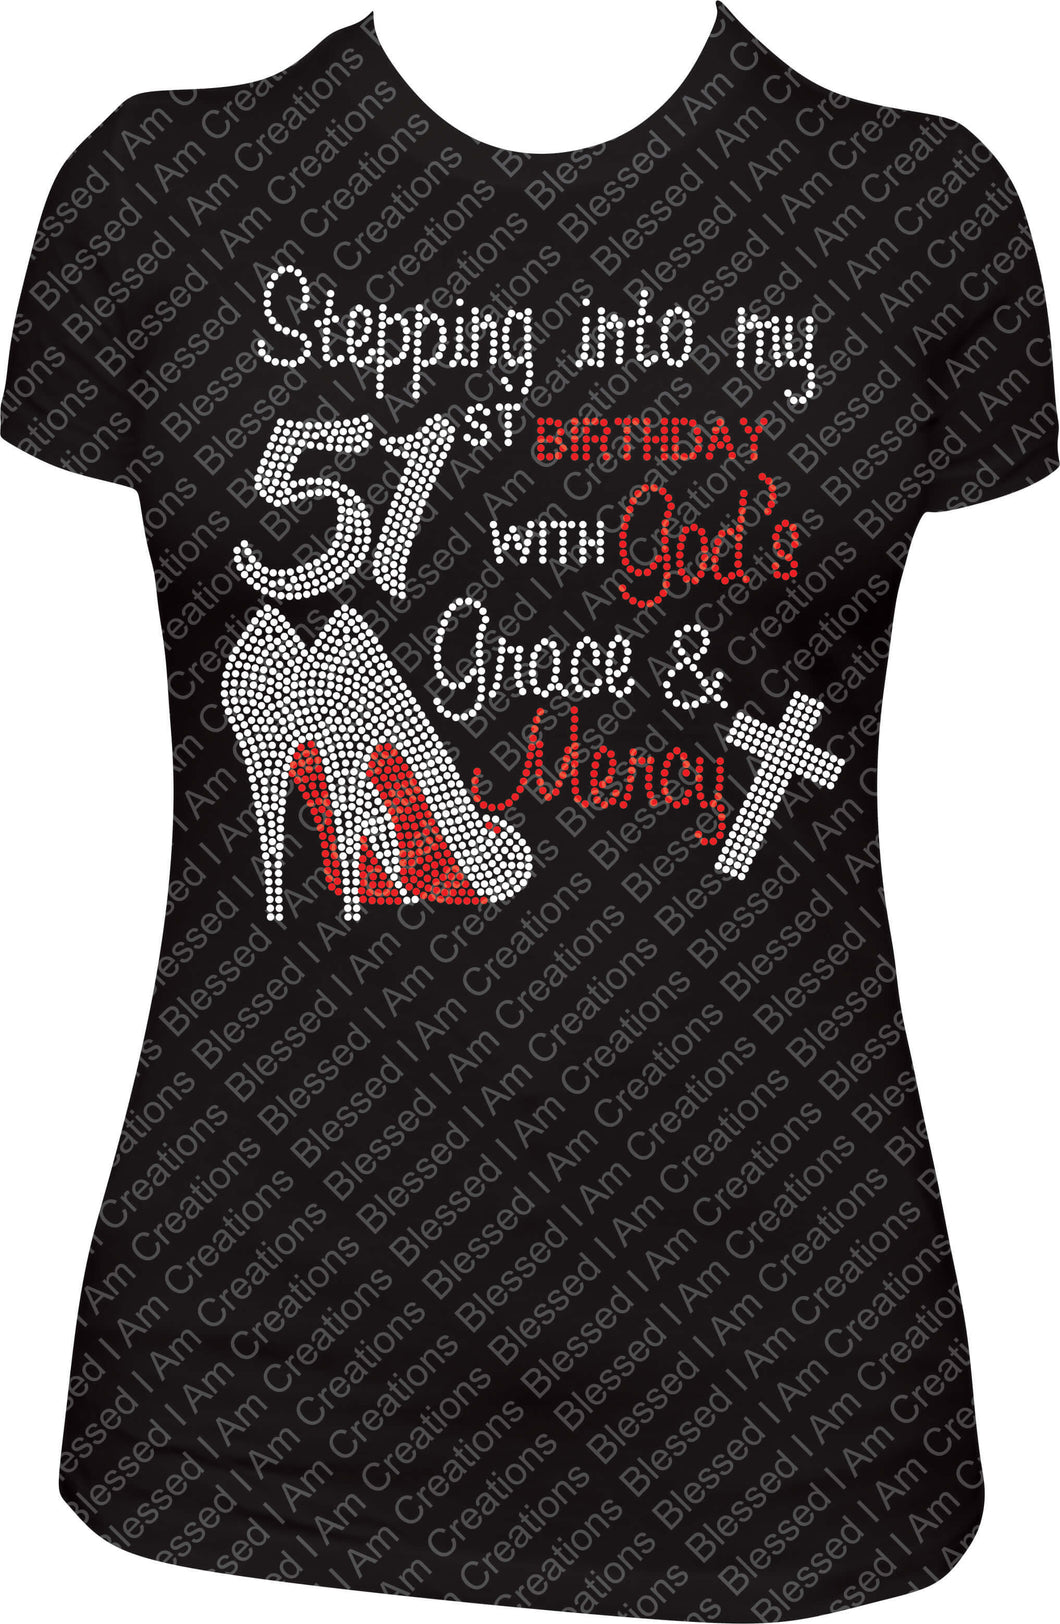 Stepping into my 51st Birthday with God's Grace and Mercy Rhinestone Birthday Shirt